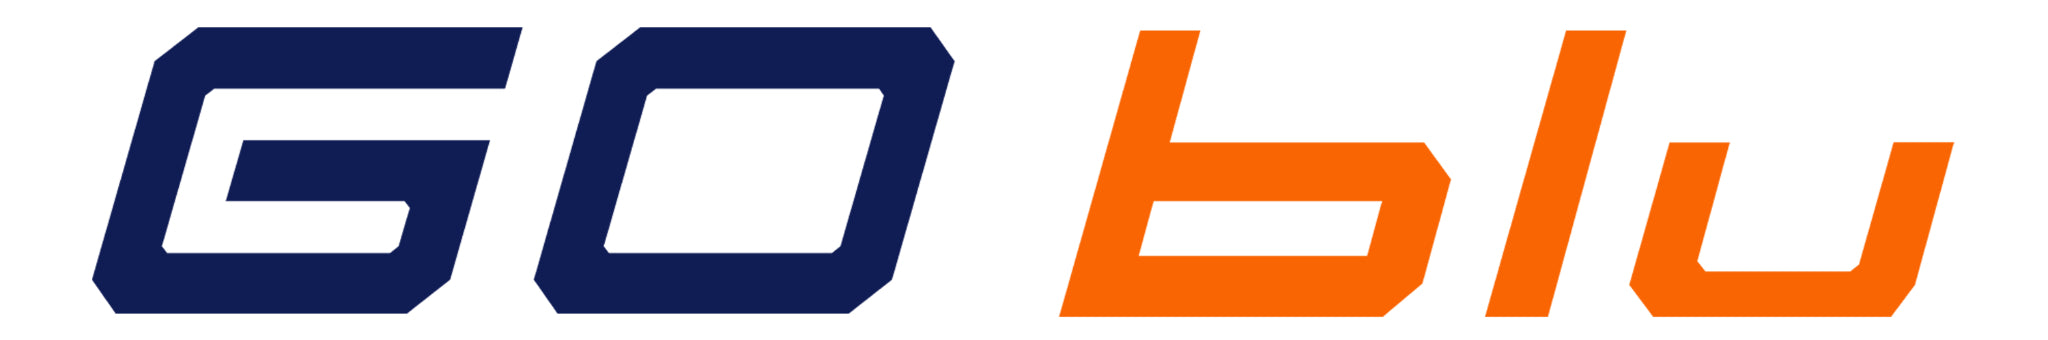 iFi GO Blu product logo